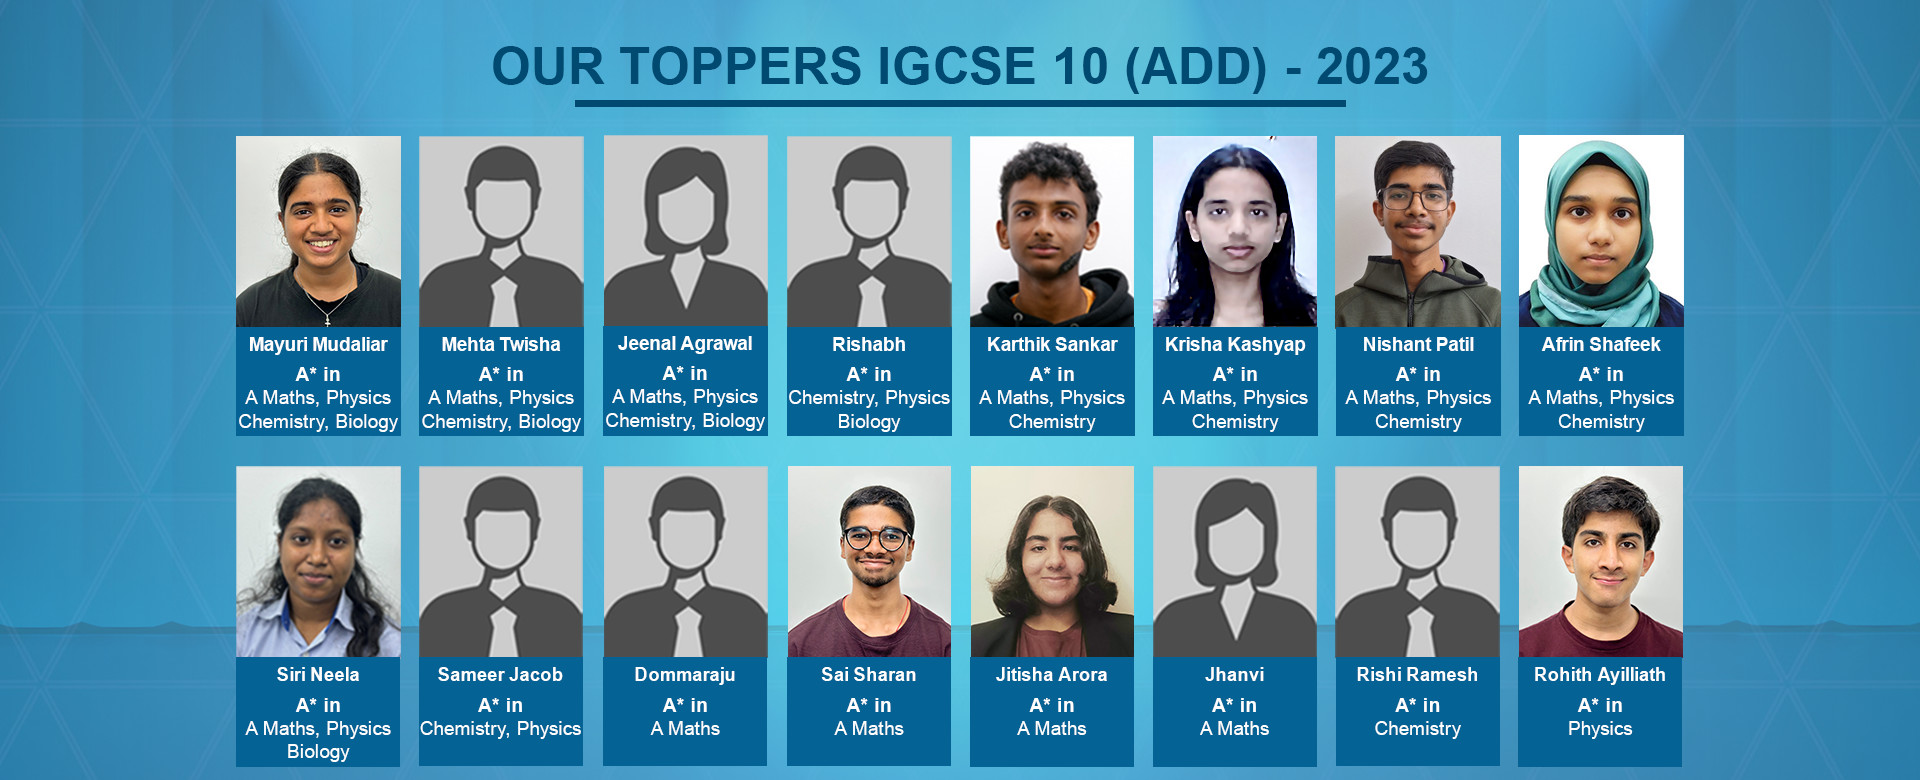 IGCSE 10 A-Maths Toppers - 2023